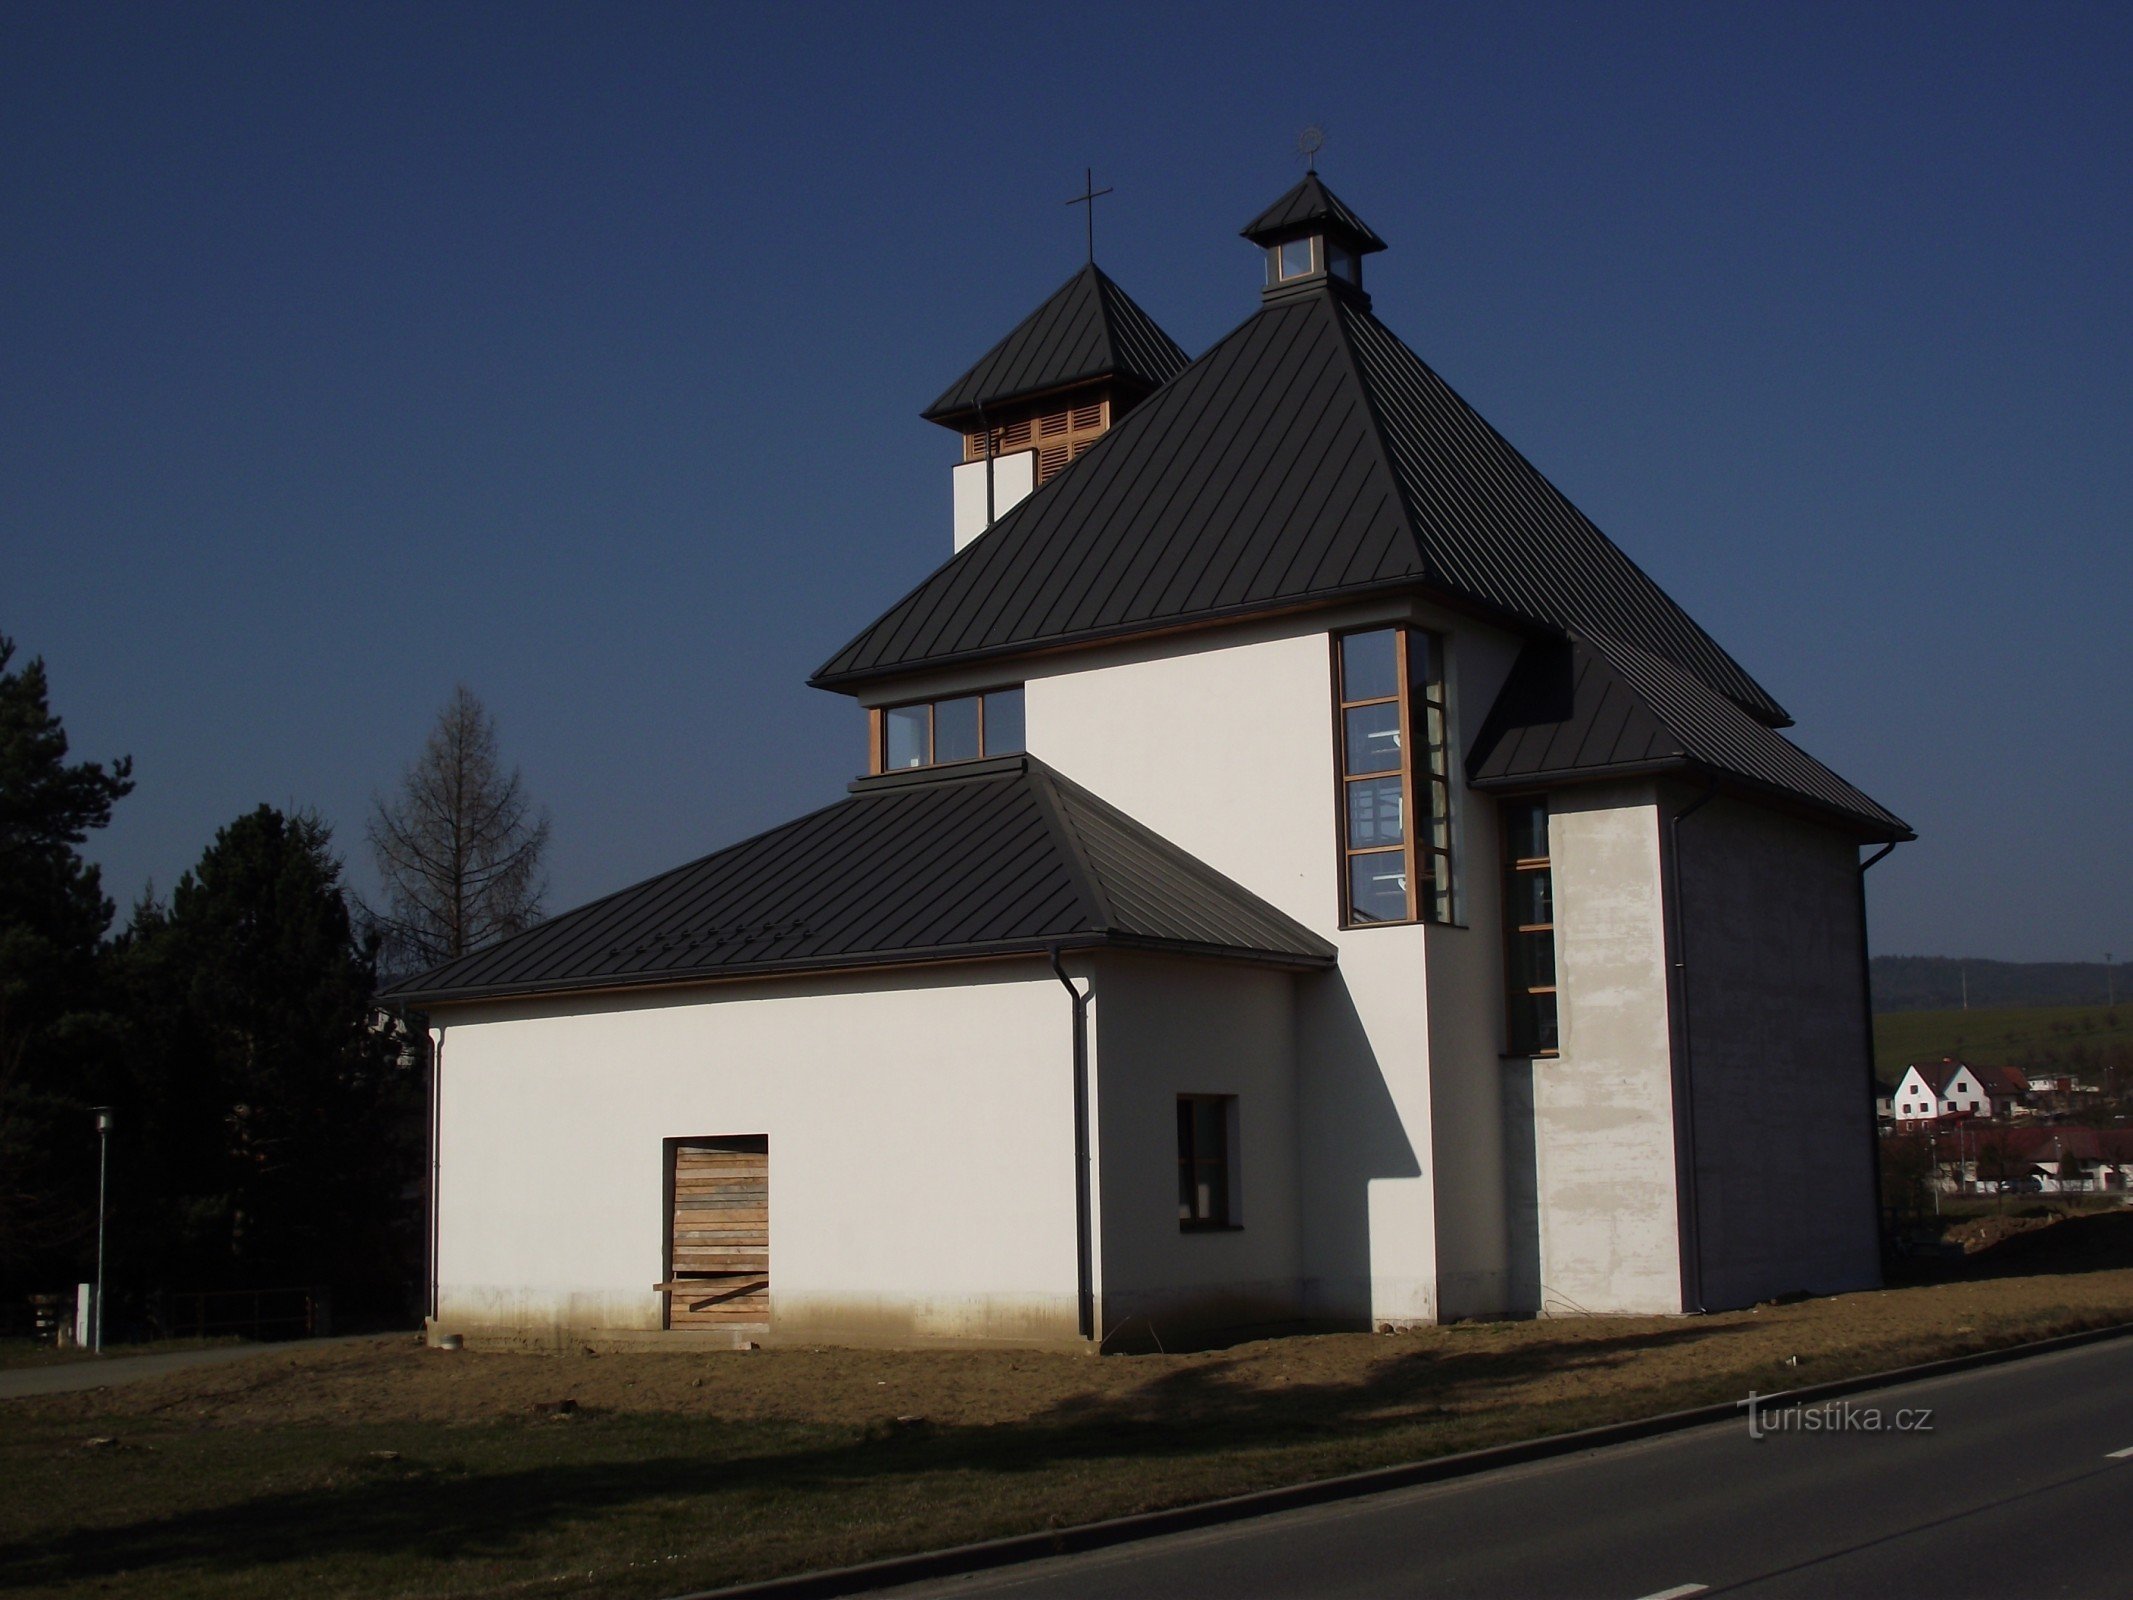 Dolní Lhota κοντά στο Luhačovice - η εκκλησία της Παναγίας του Carmel